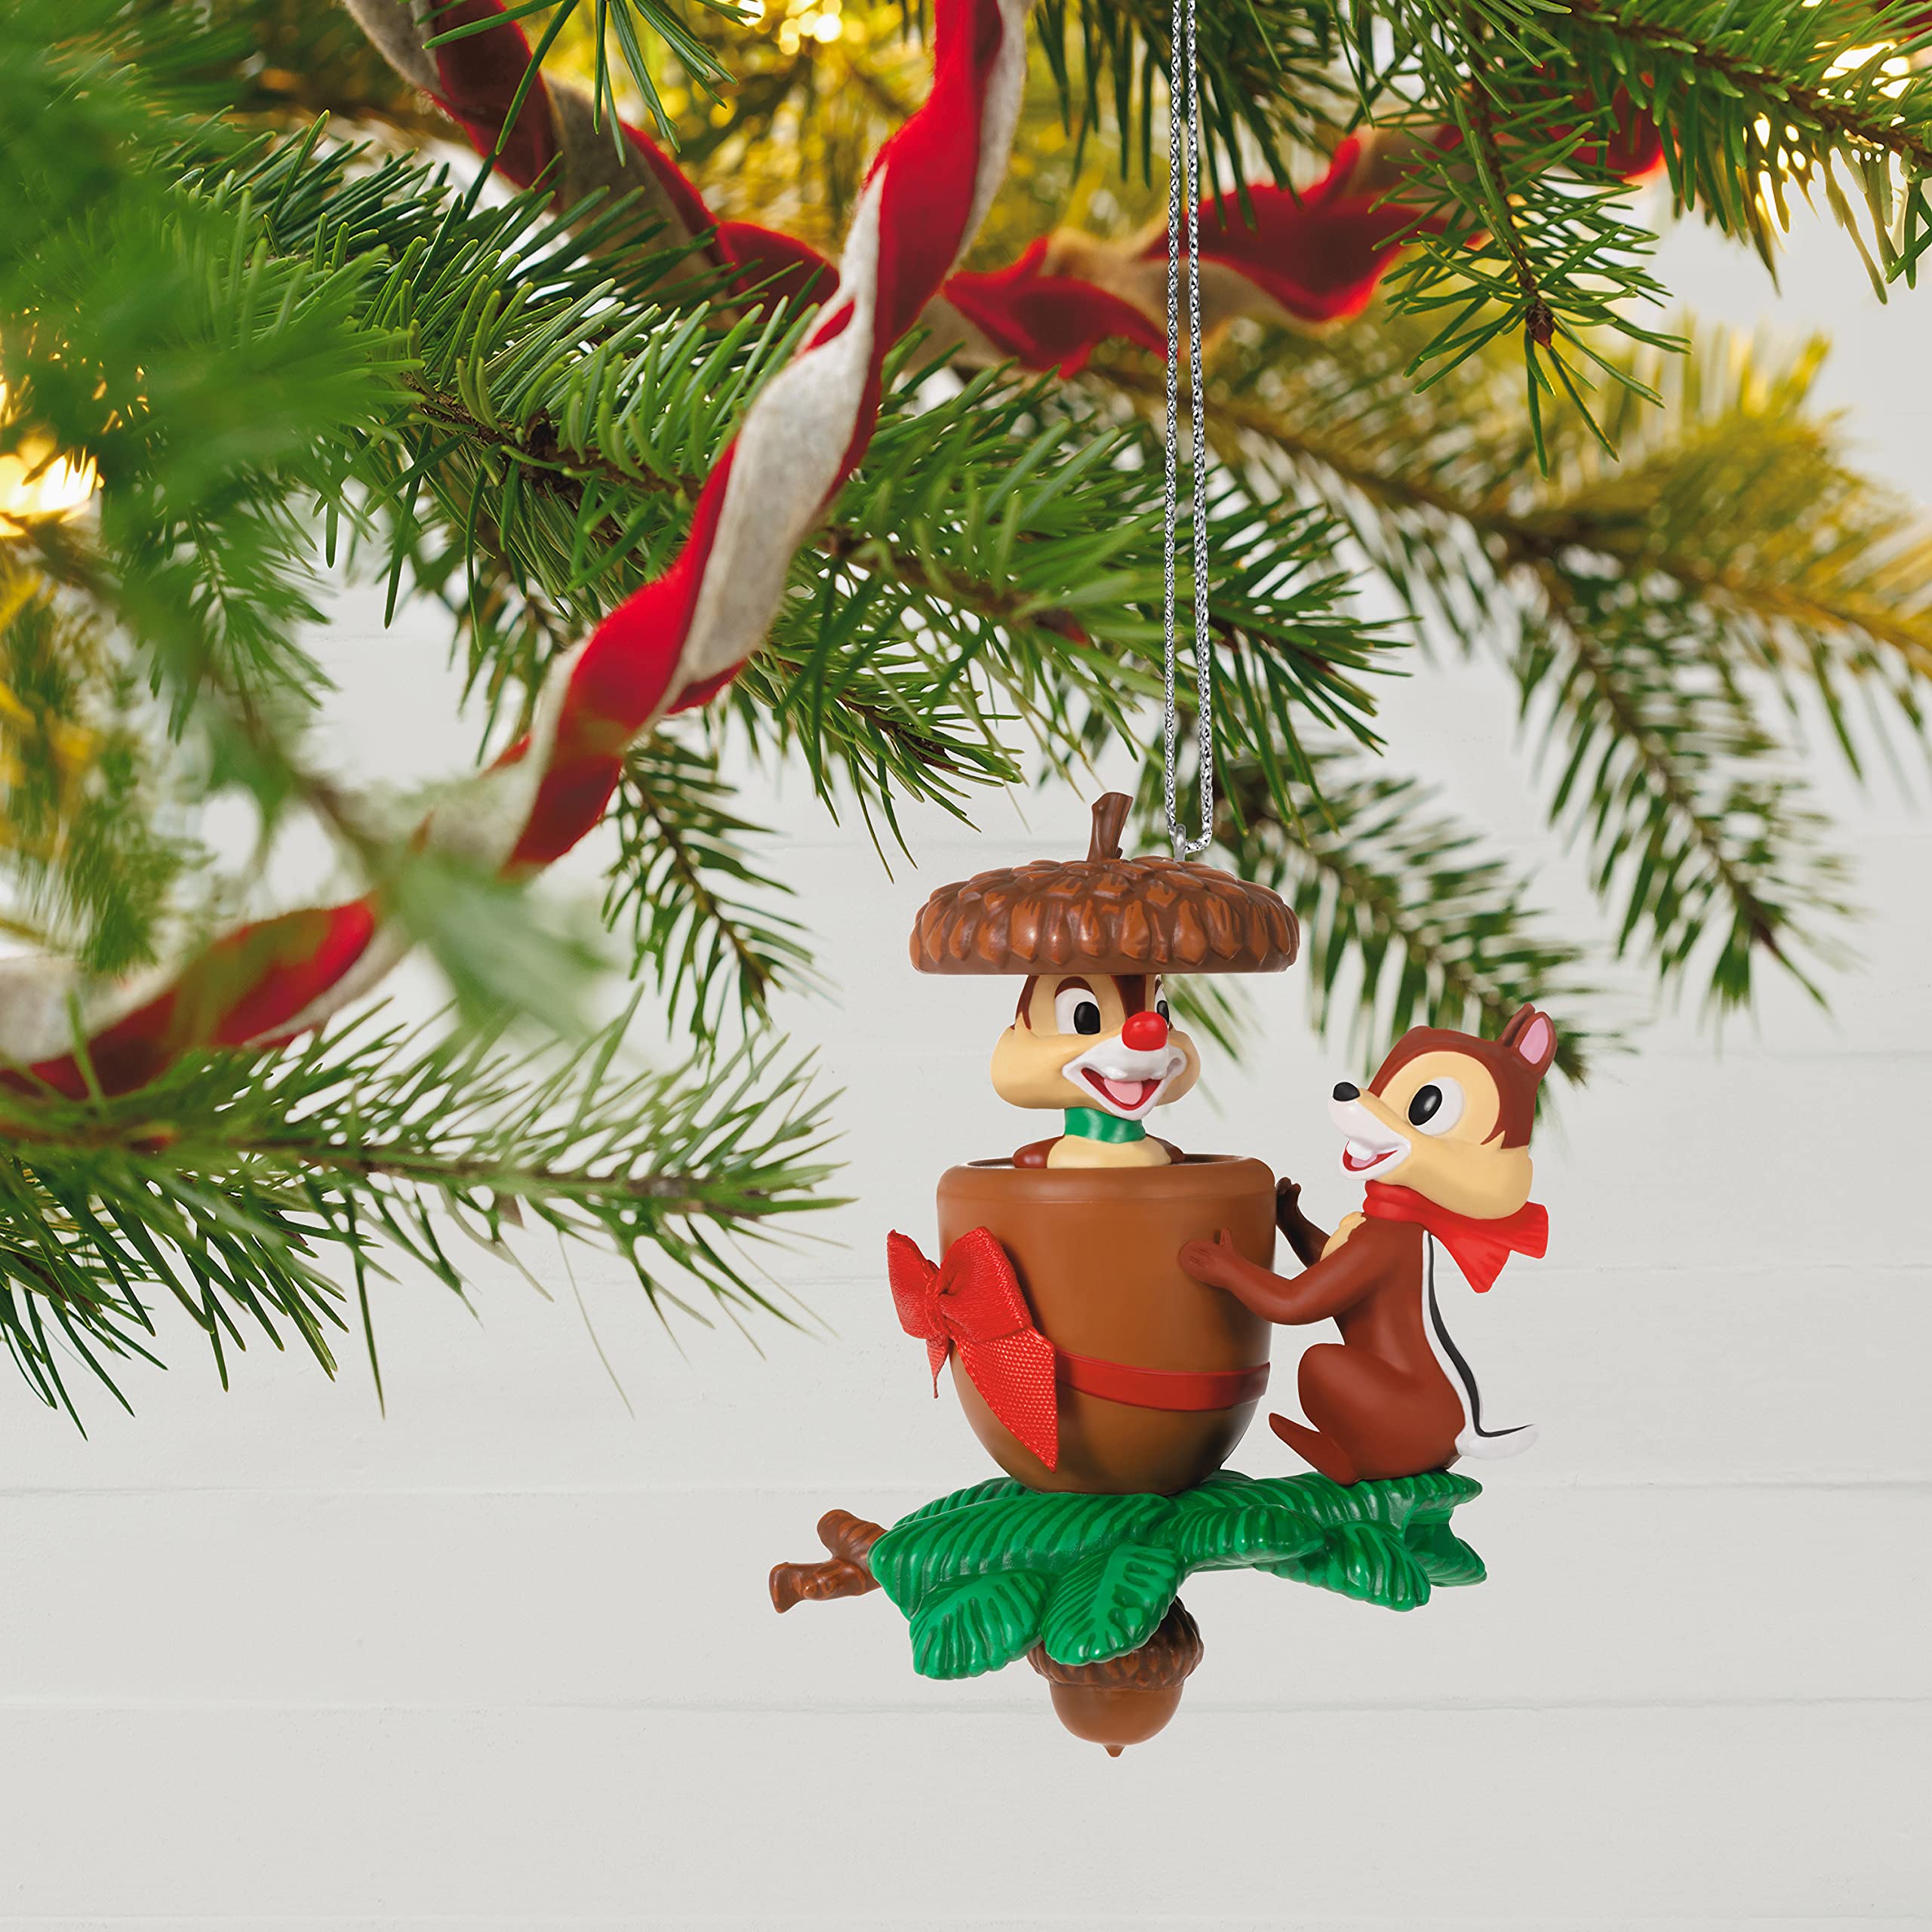 Hallmark Keepsake Christmas Ornament 2021, Disney Chip and Dale in a Nutshell, Motion